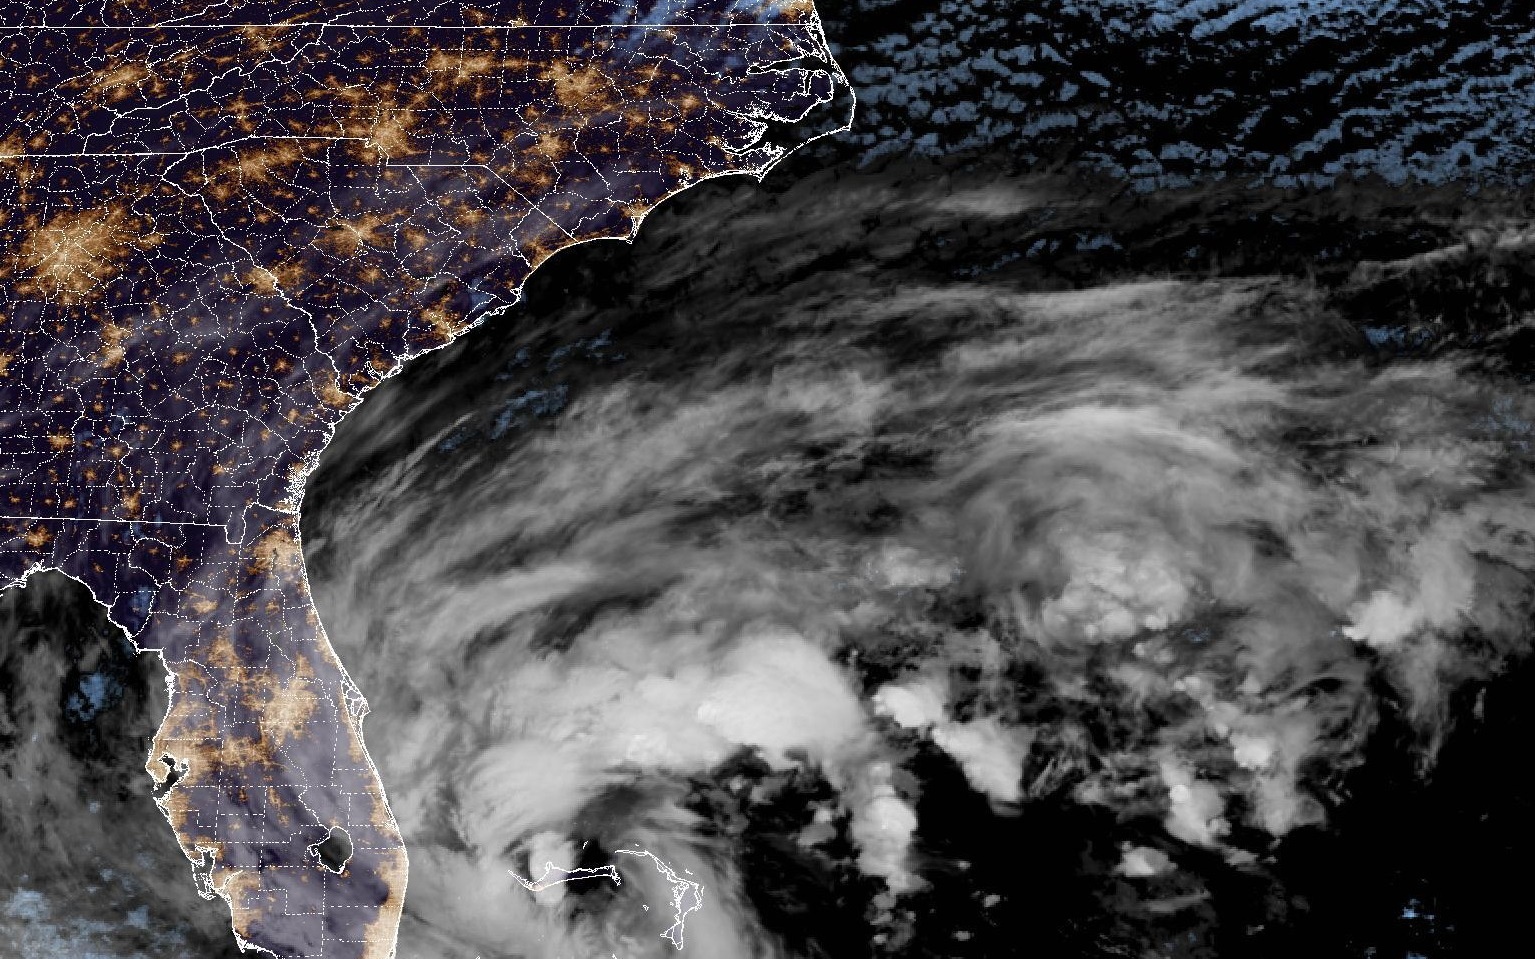 Hurricane Nicole will make landfall in Florida tonight according to forecasts